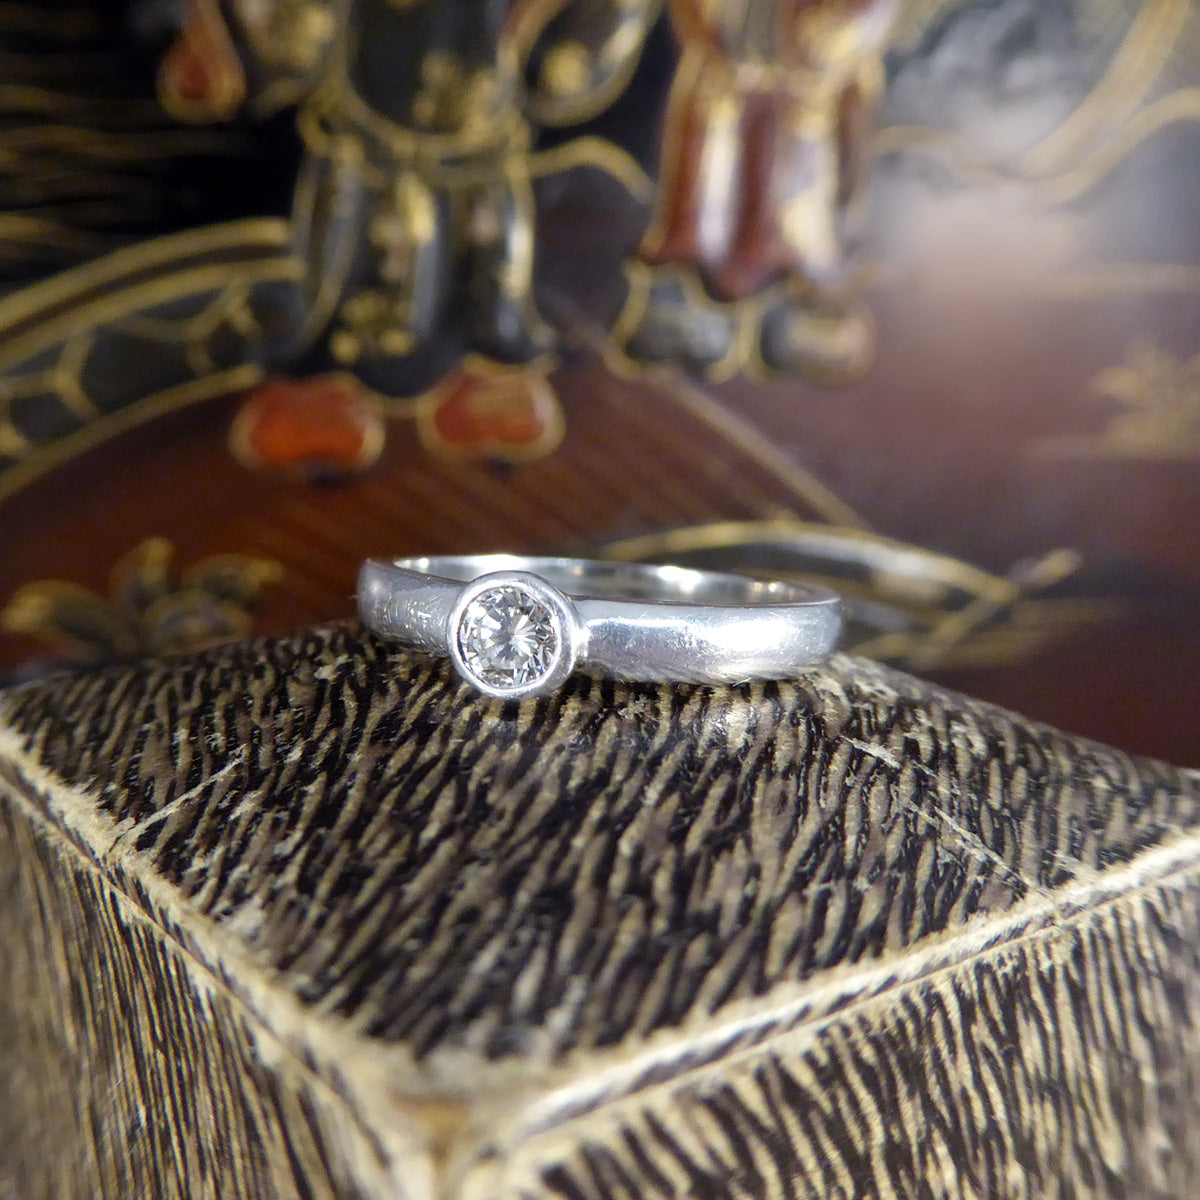 Vintage Rub Over Collar Set Diamond Solitaire Ring in Platinum